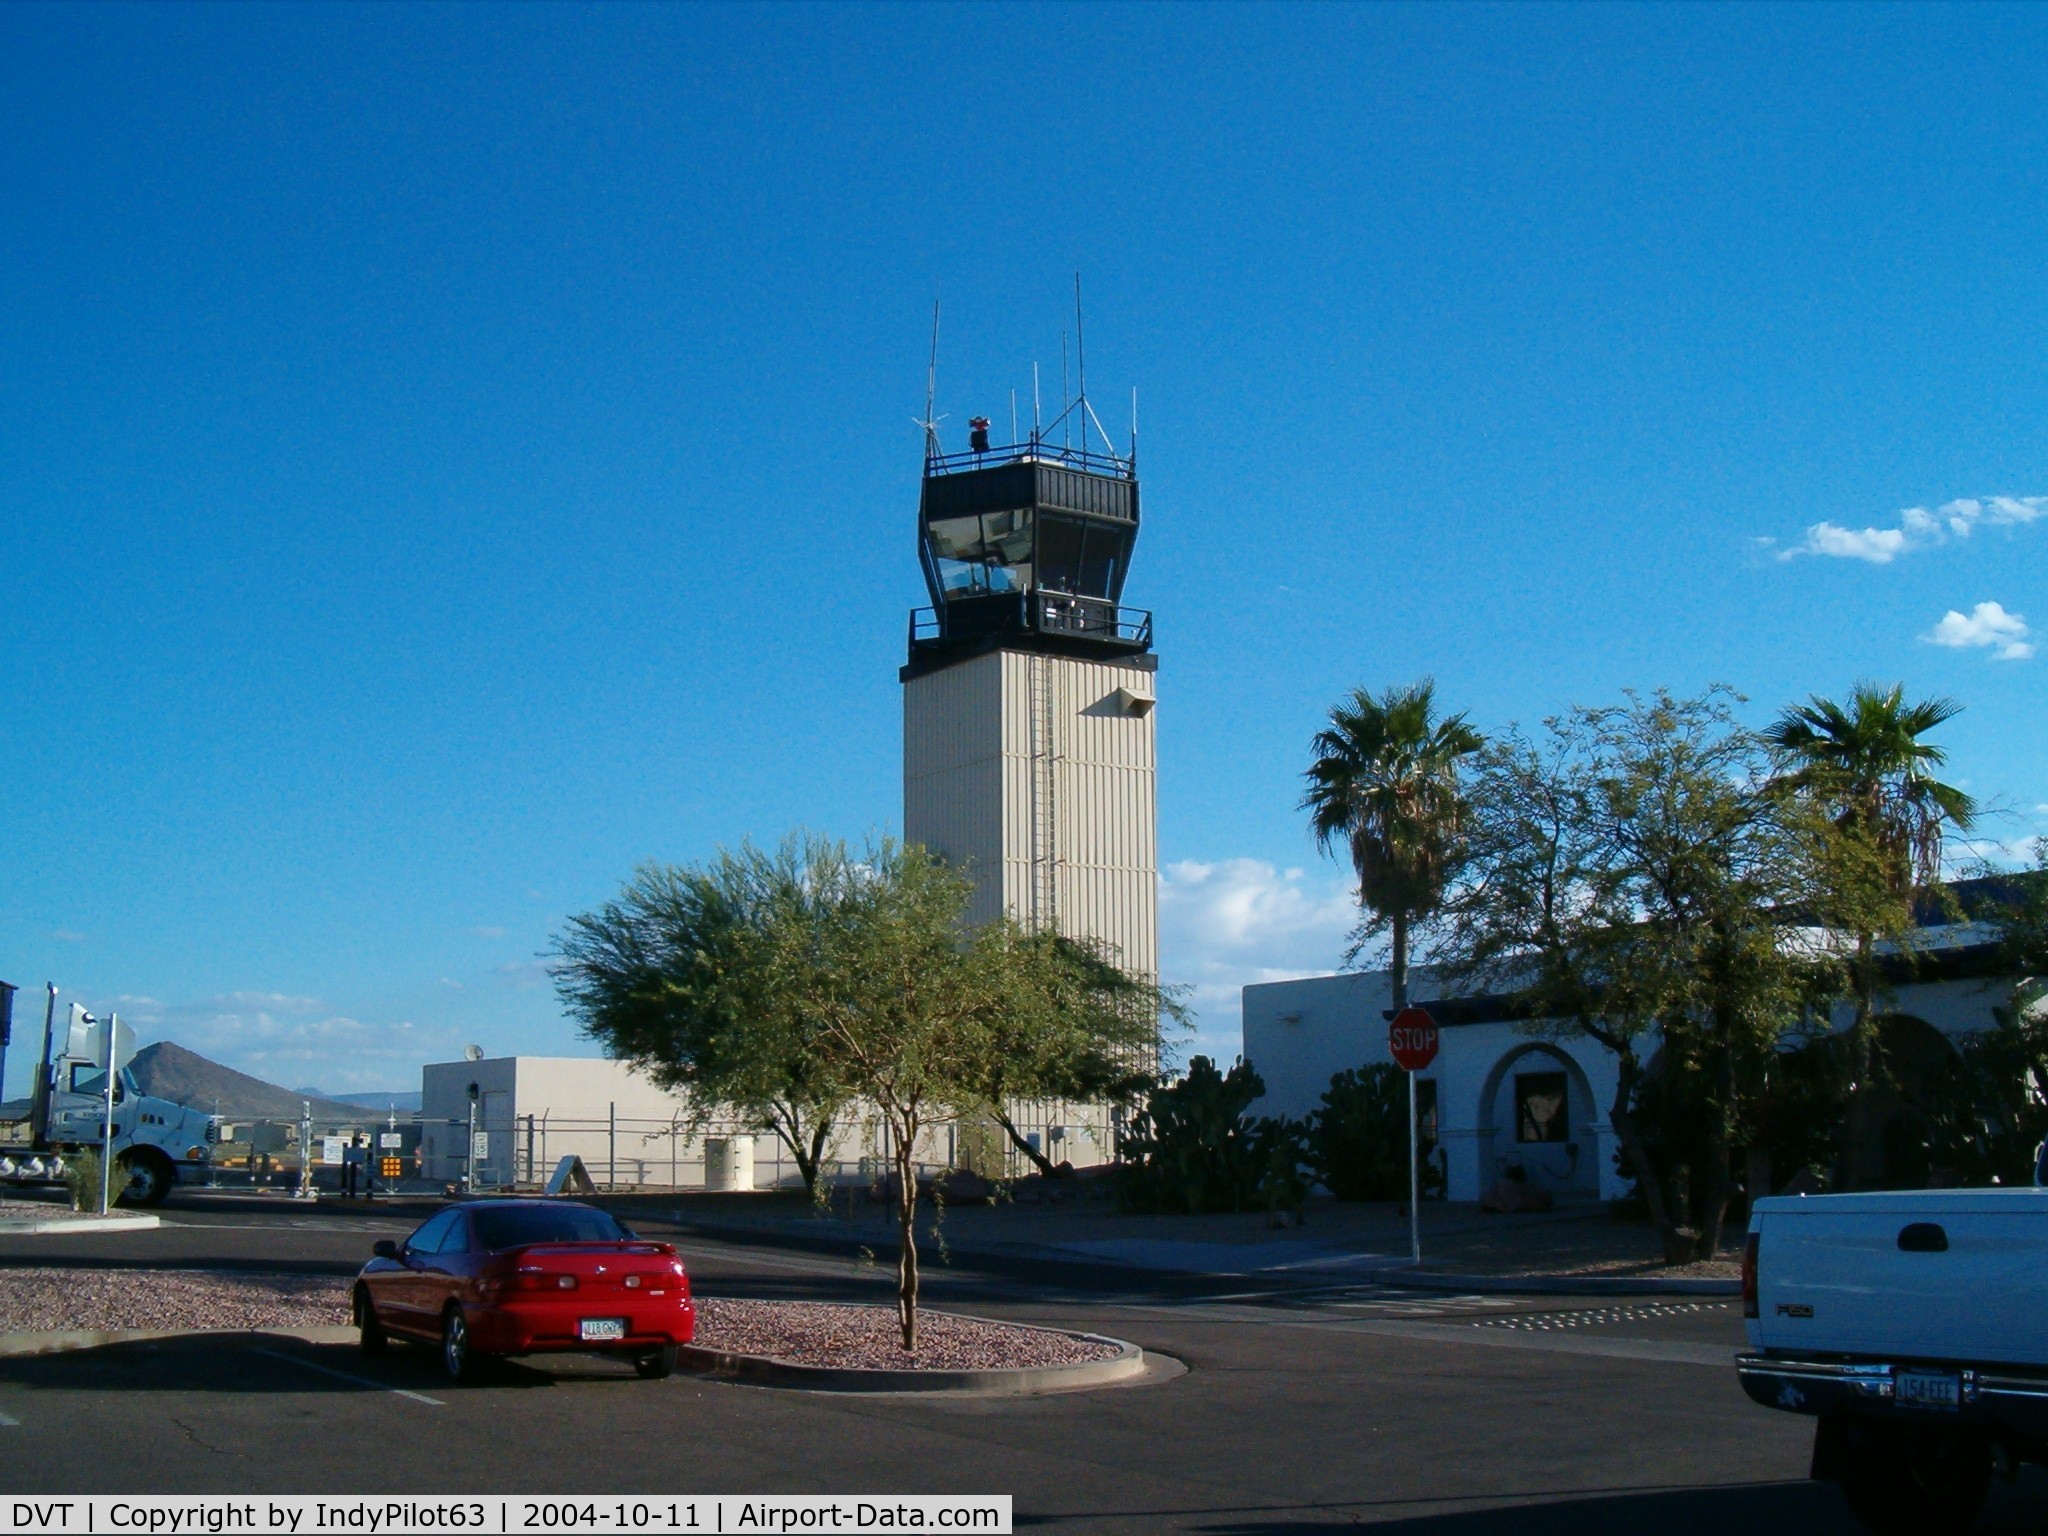 Phoenix Deer Valley Airport (DVT) - Tower